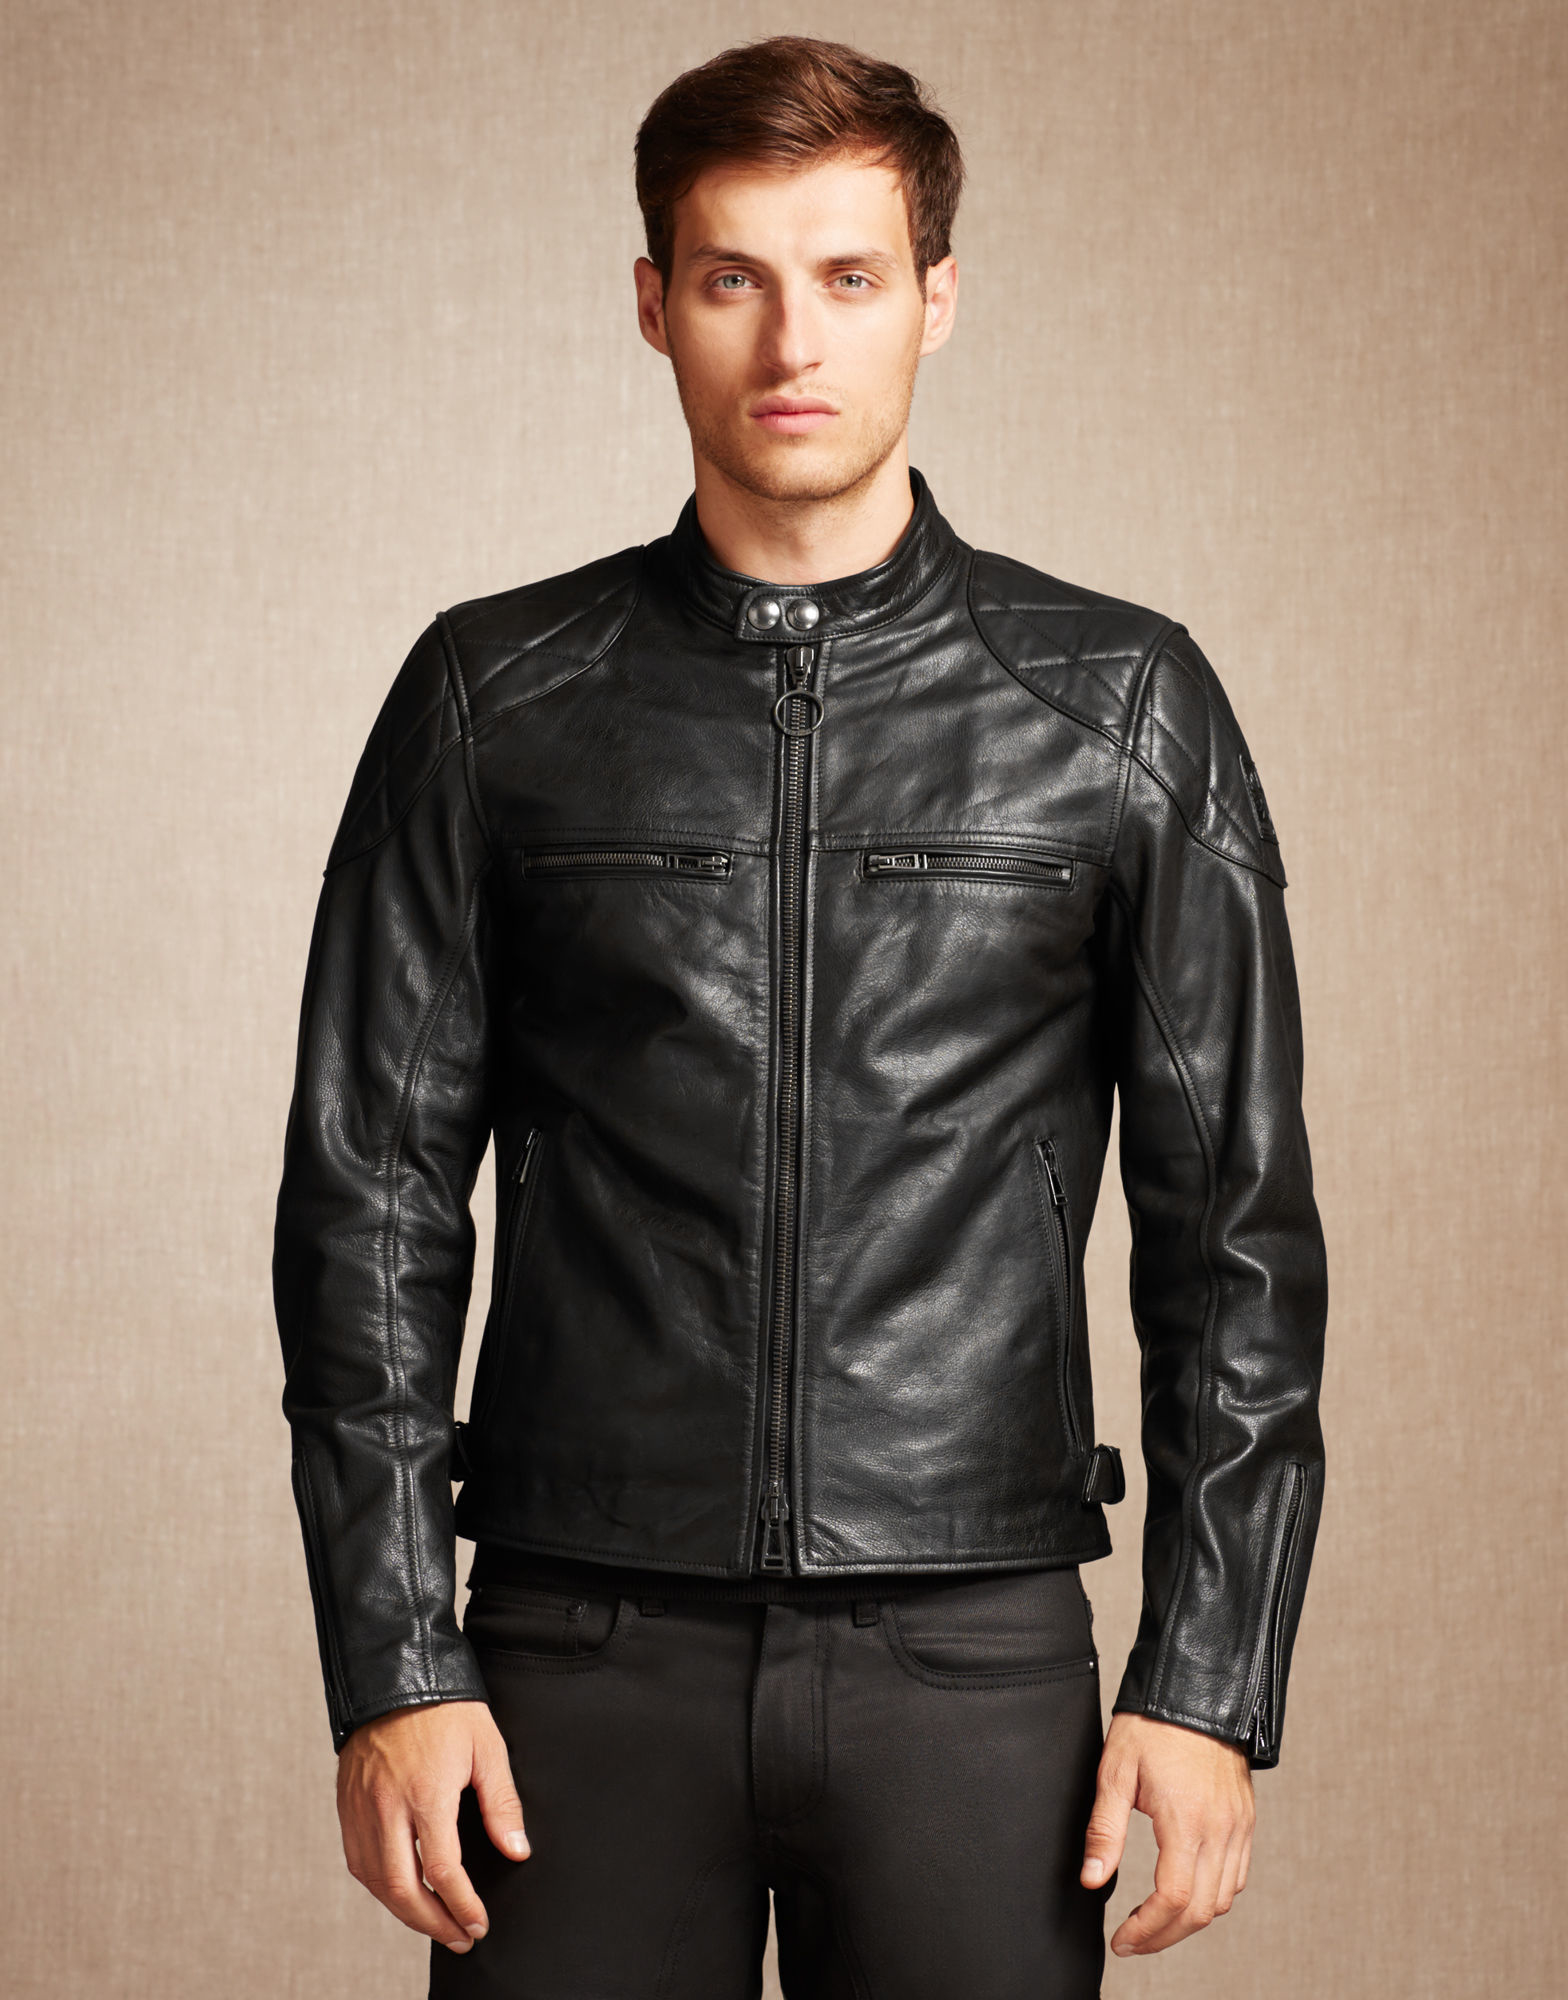 Lyst - Belstaff Collingwood Jacket in Black for Men